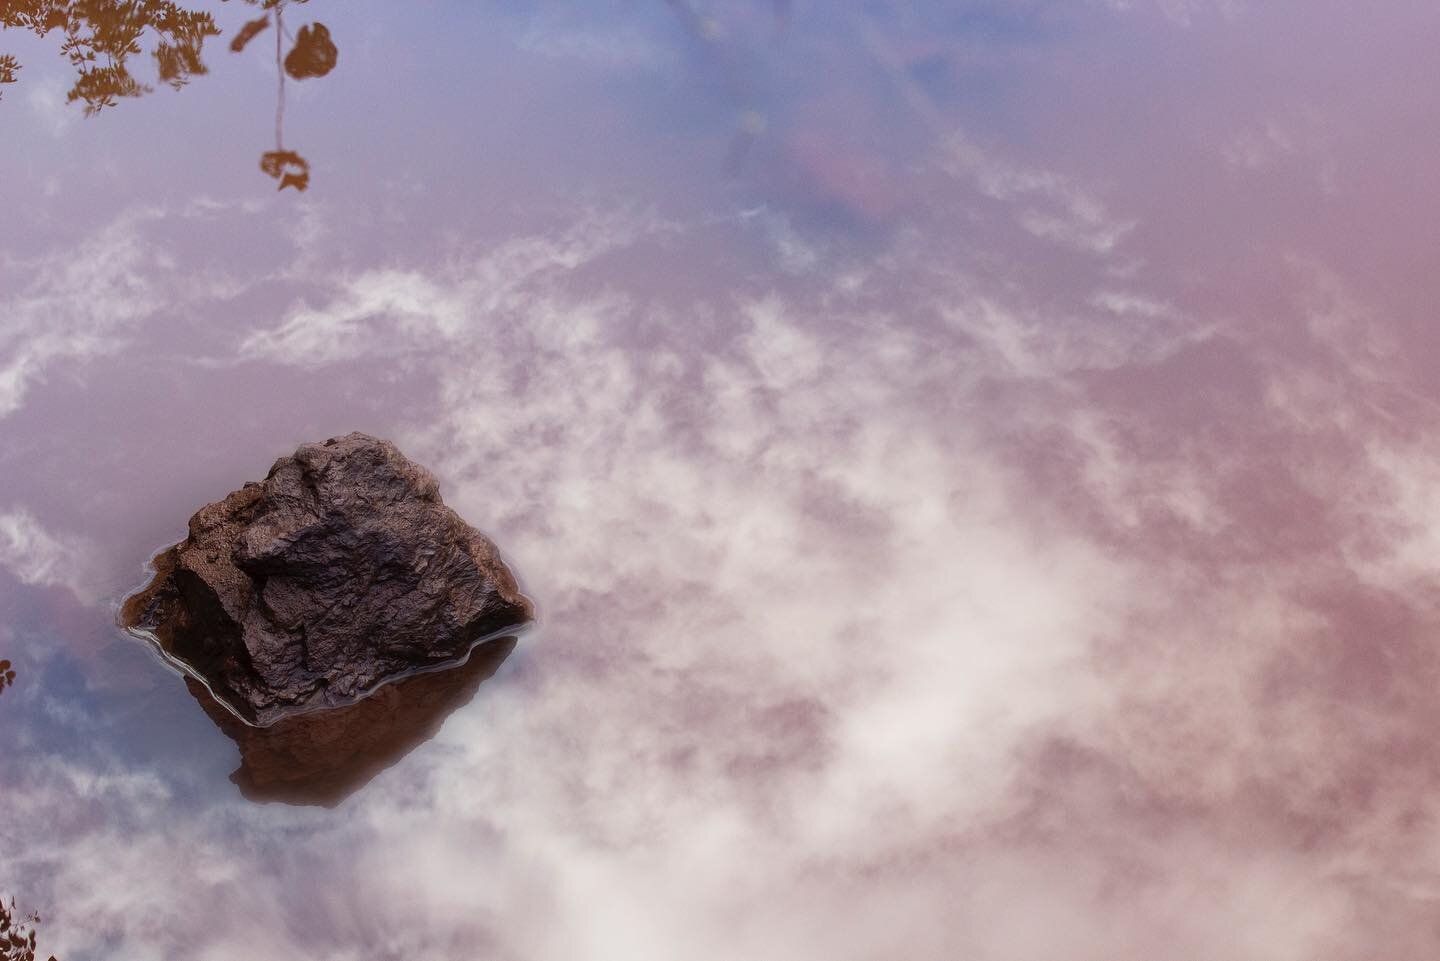 Ah rocks

#photo #photography #rocks #nature #naturephotography #lakephotography #water #reflection #clouds